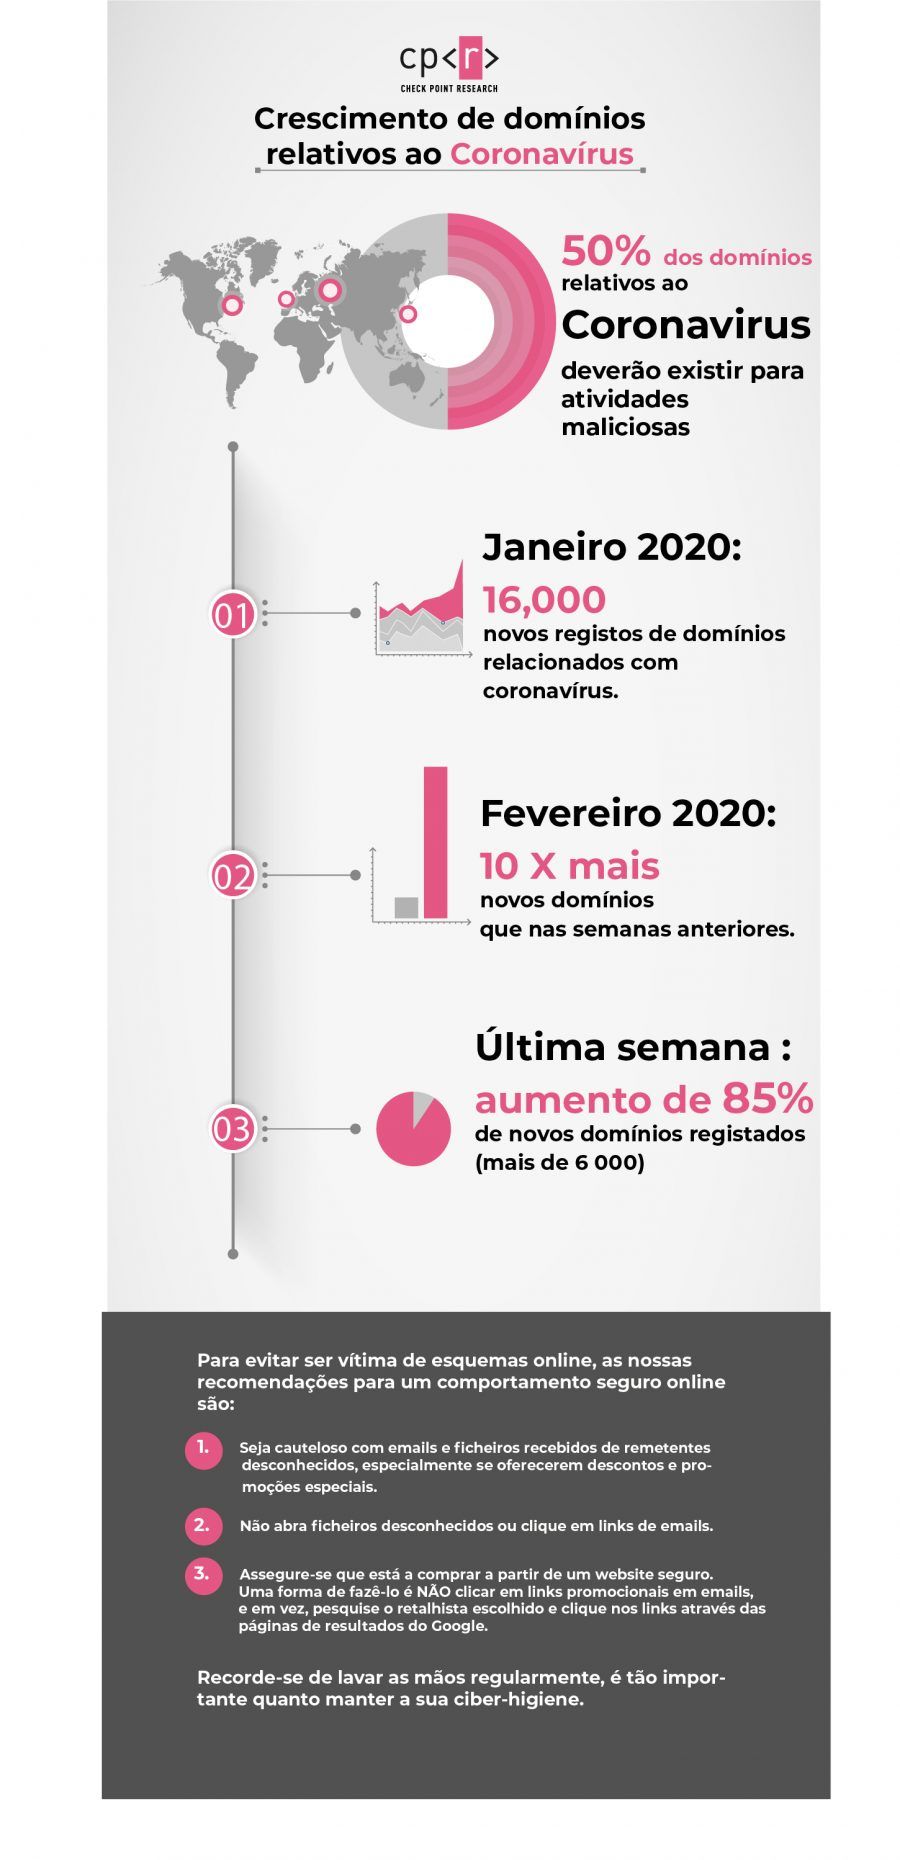 Coronavirus vertical infographic cibercriminosos, covid-19, malware